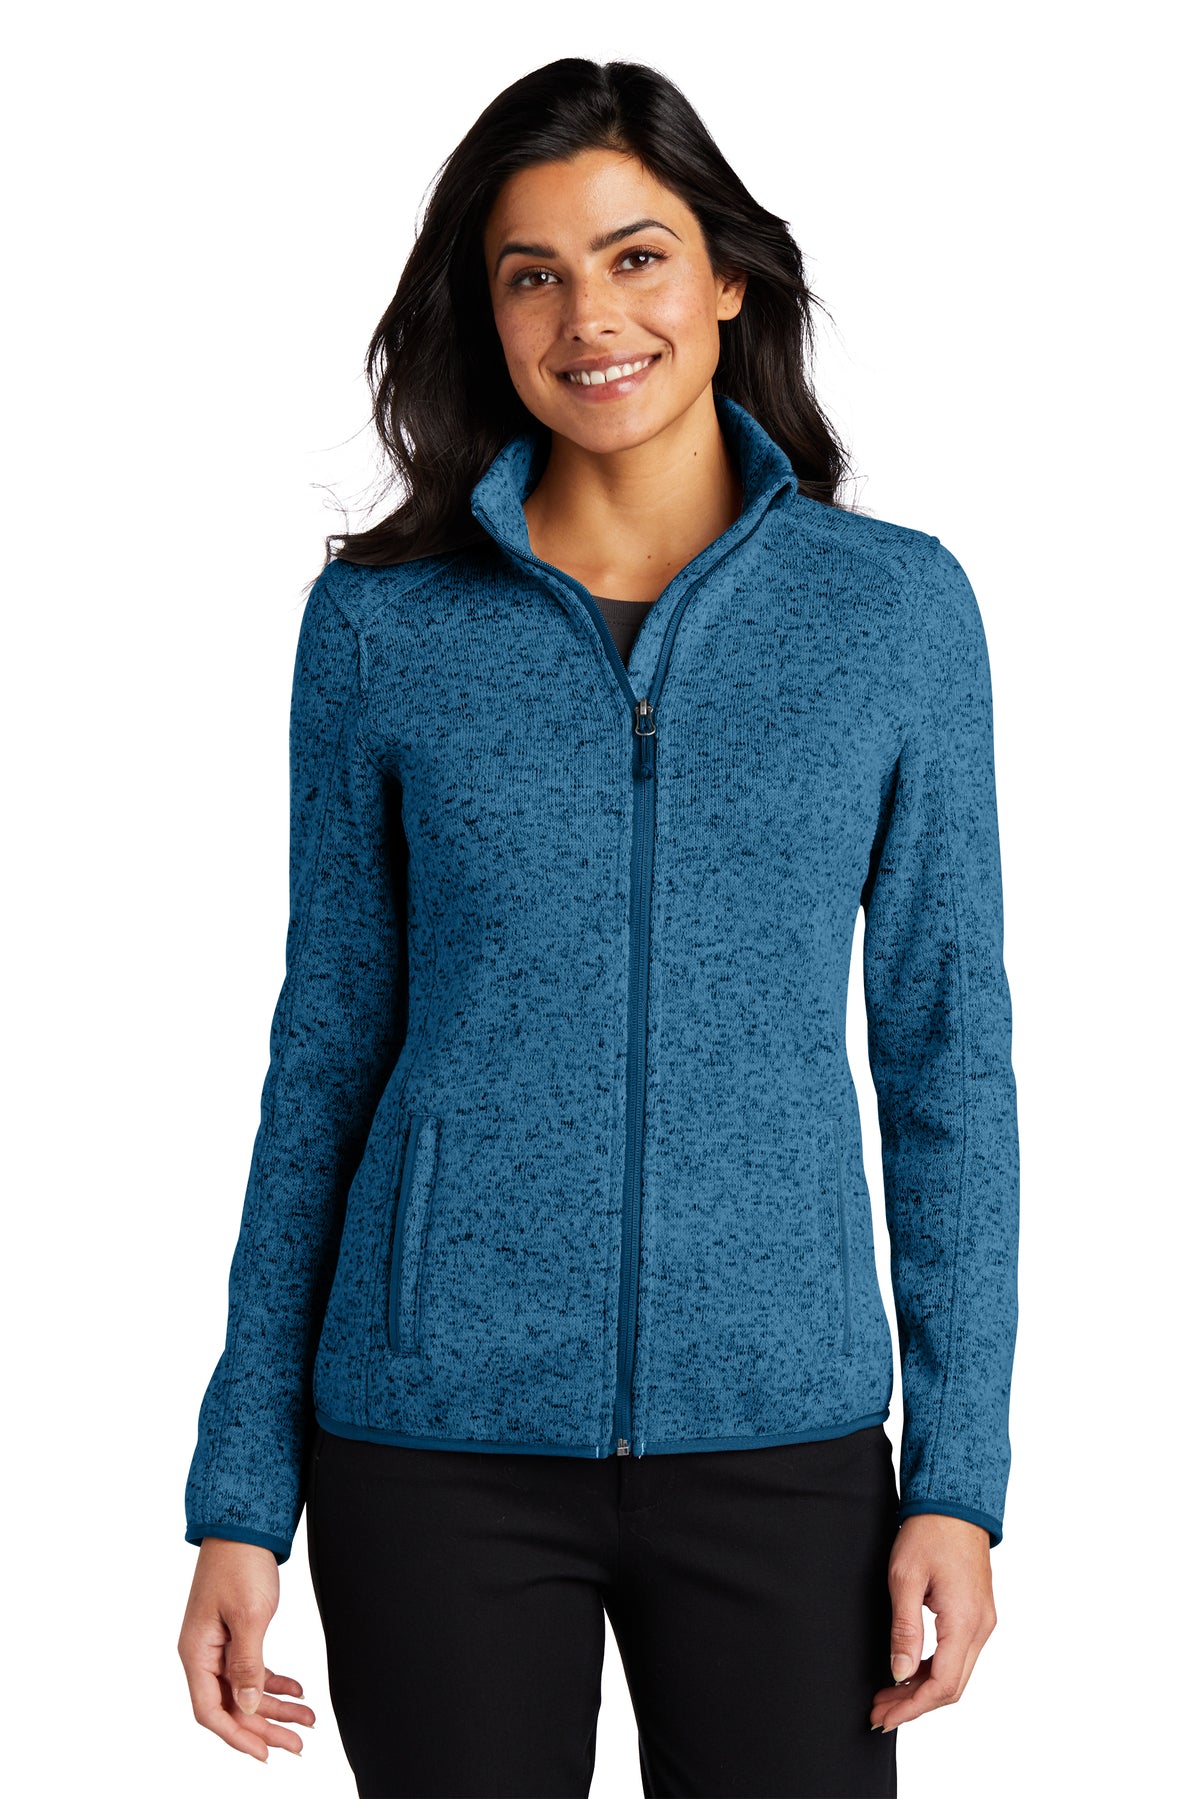 Ladies Sweater Fleece Jacket - Choose Your Logo